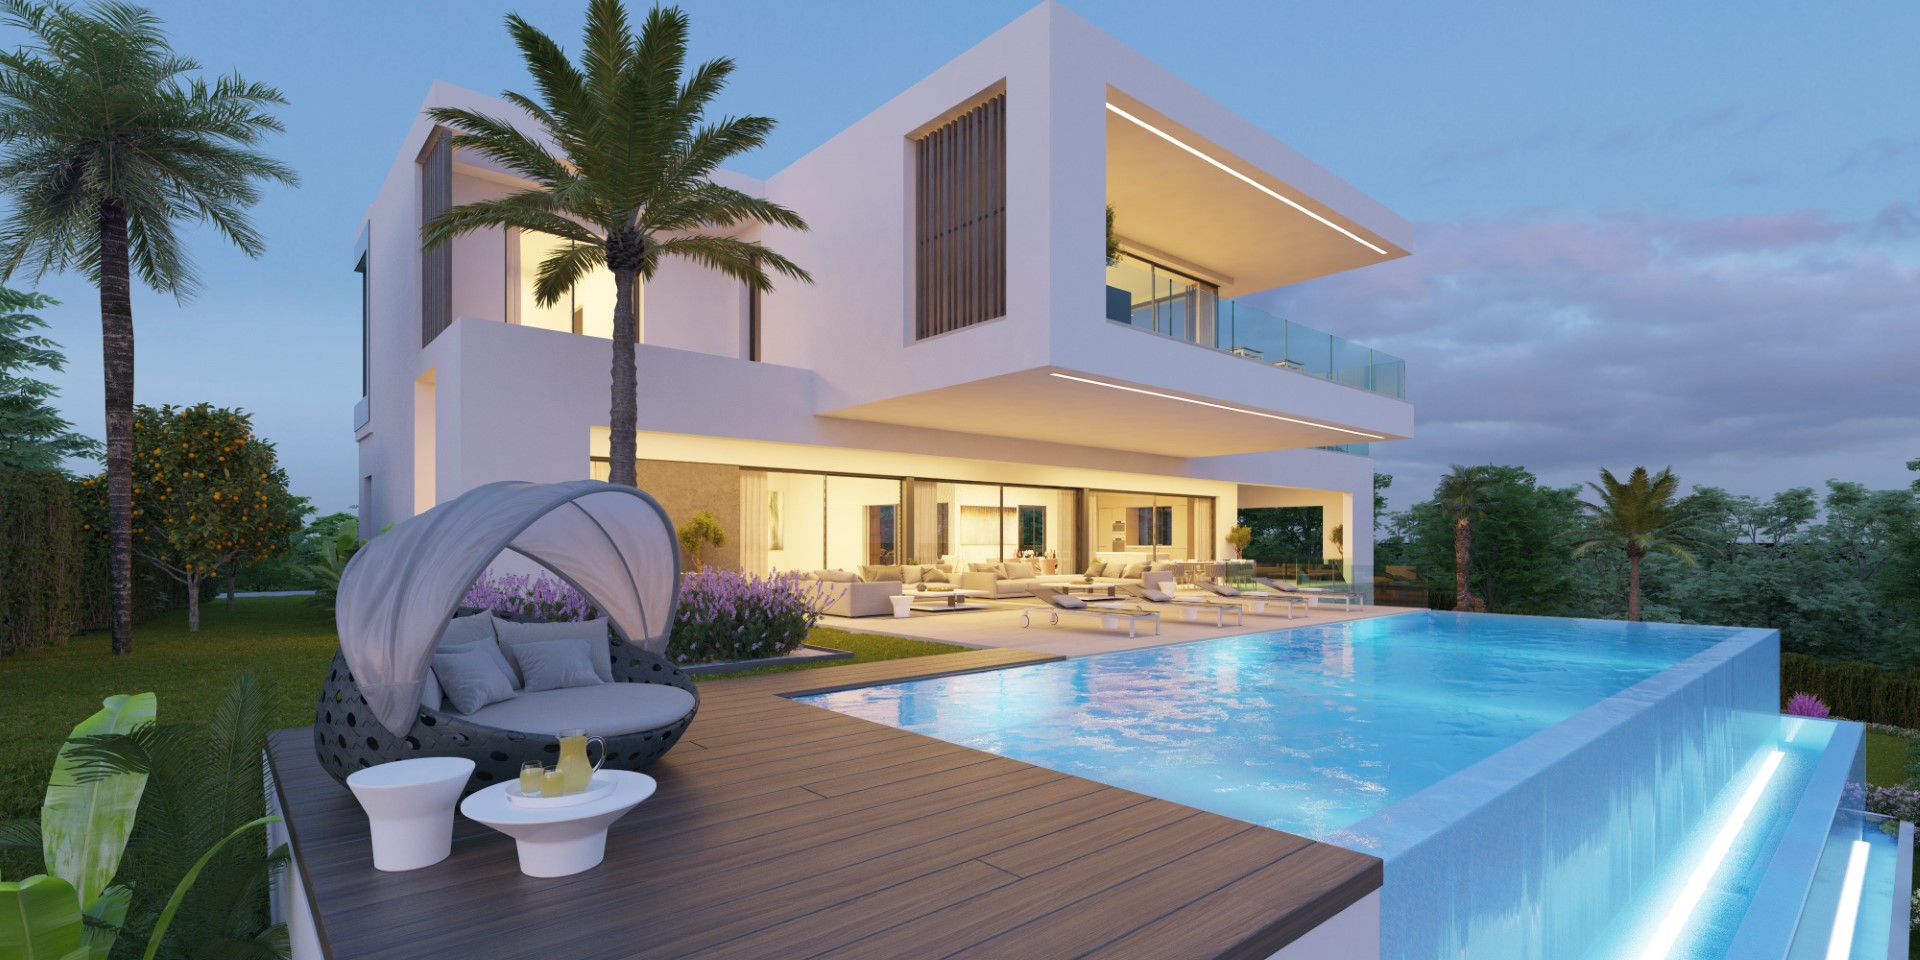 Seven Guidelines to Achieve a Beautiful Modern Villa Design